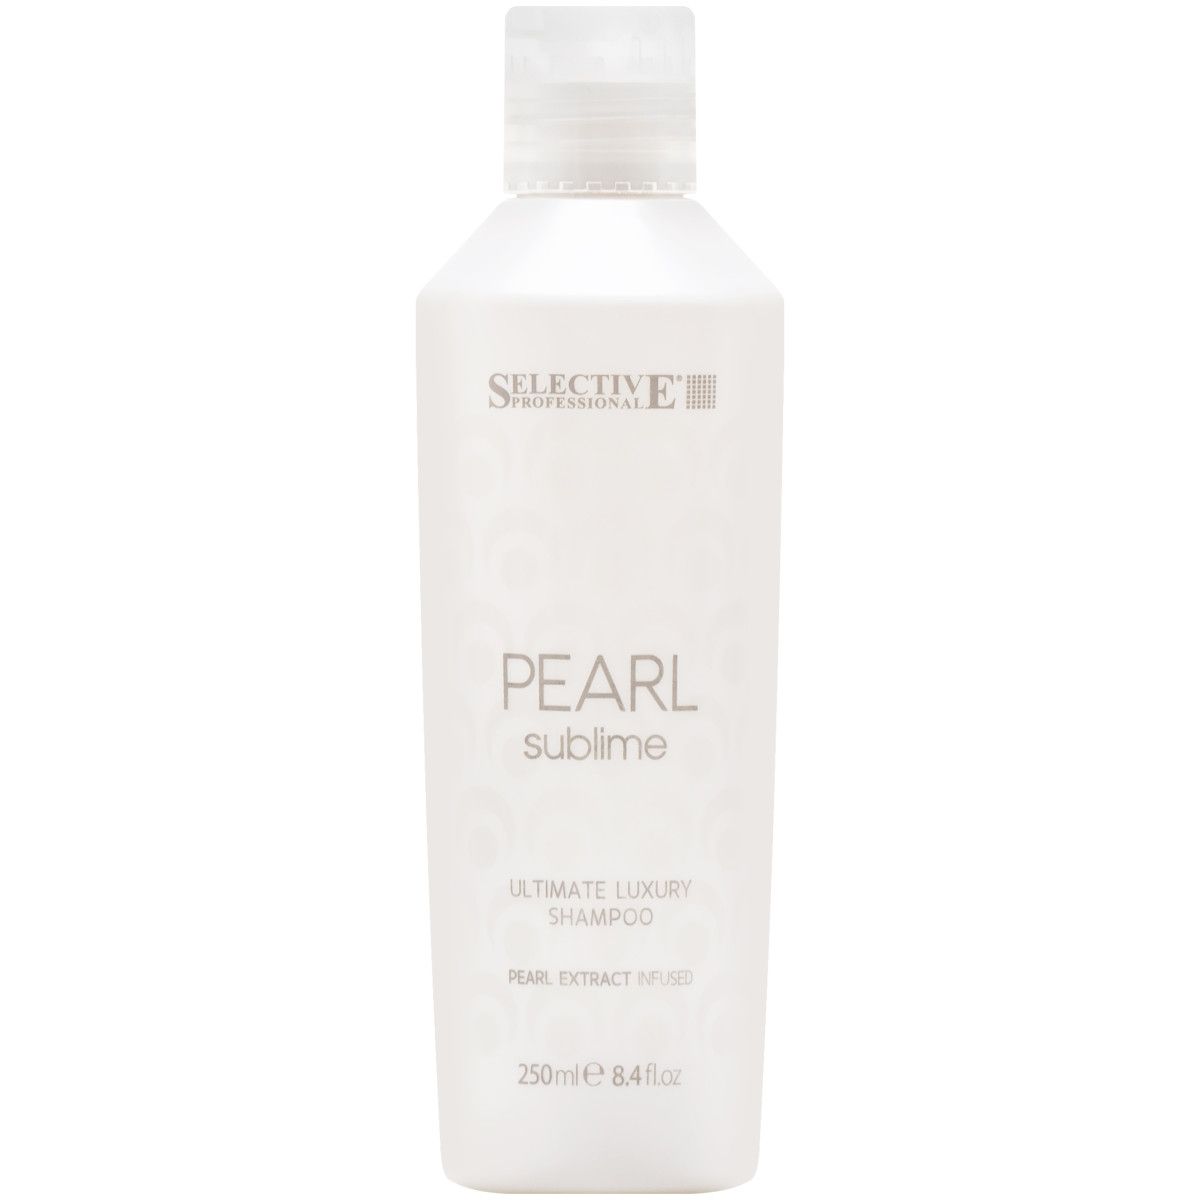 Selective Pearl Sublime Ultimate Luxury - szampon do włosów blond, 250ml